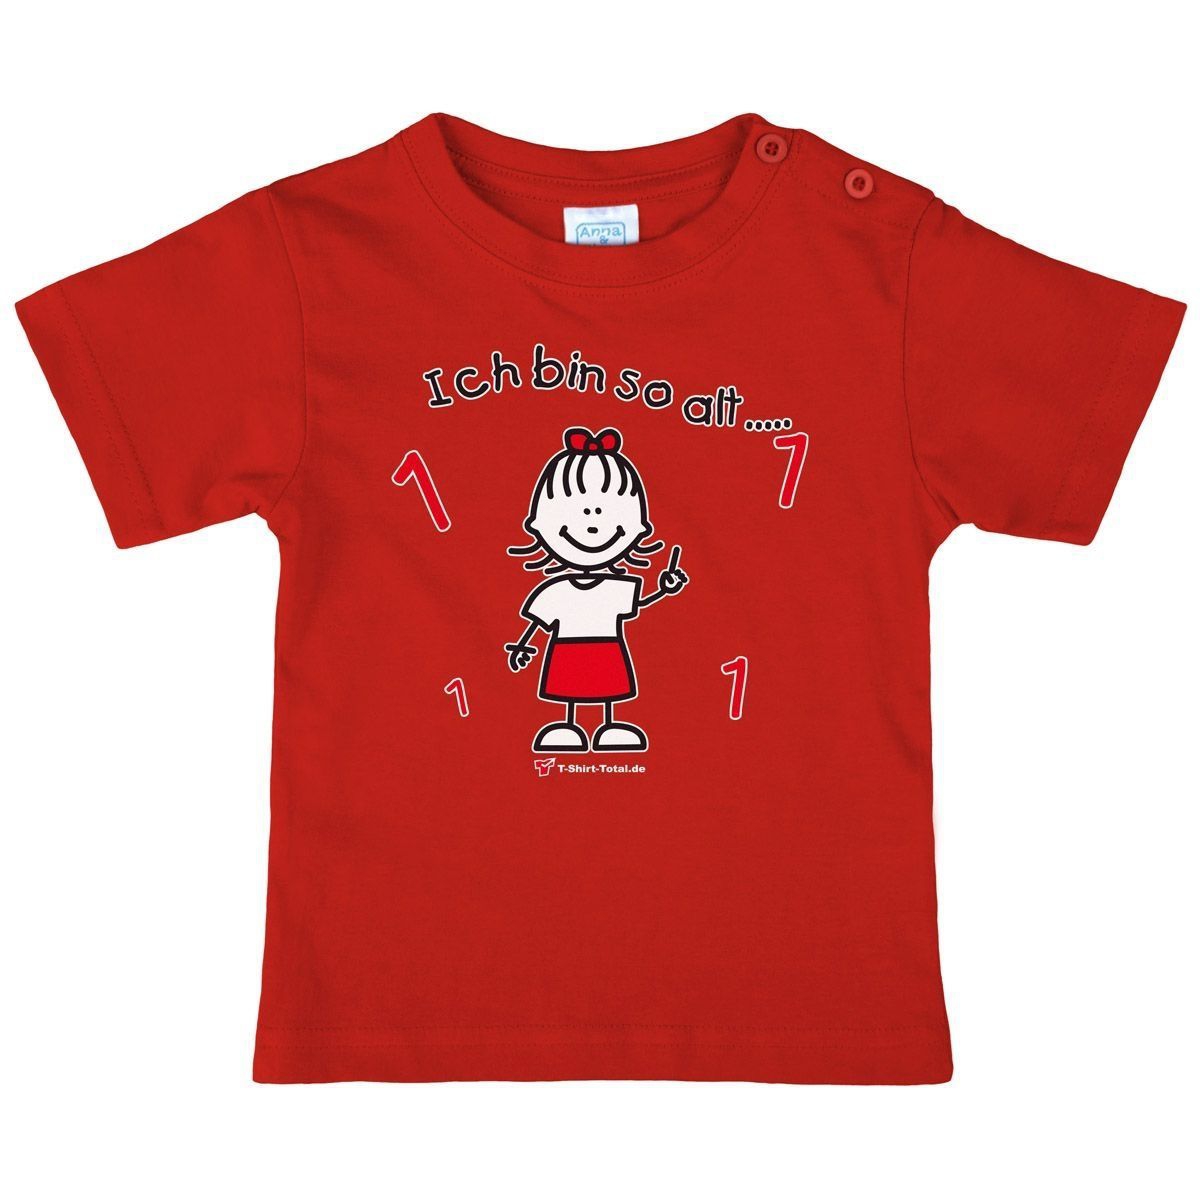 Mädchen so alt 1 Kinder T-Shirt rot 68 / 74